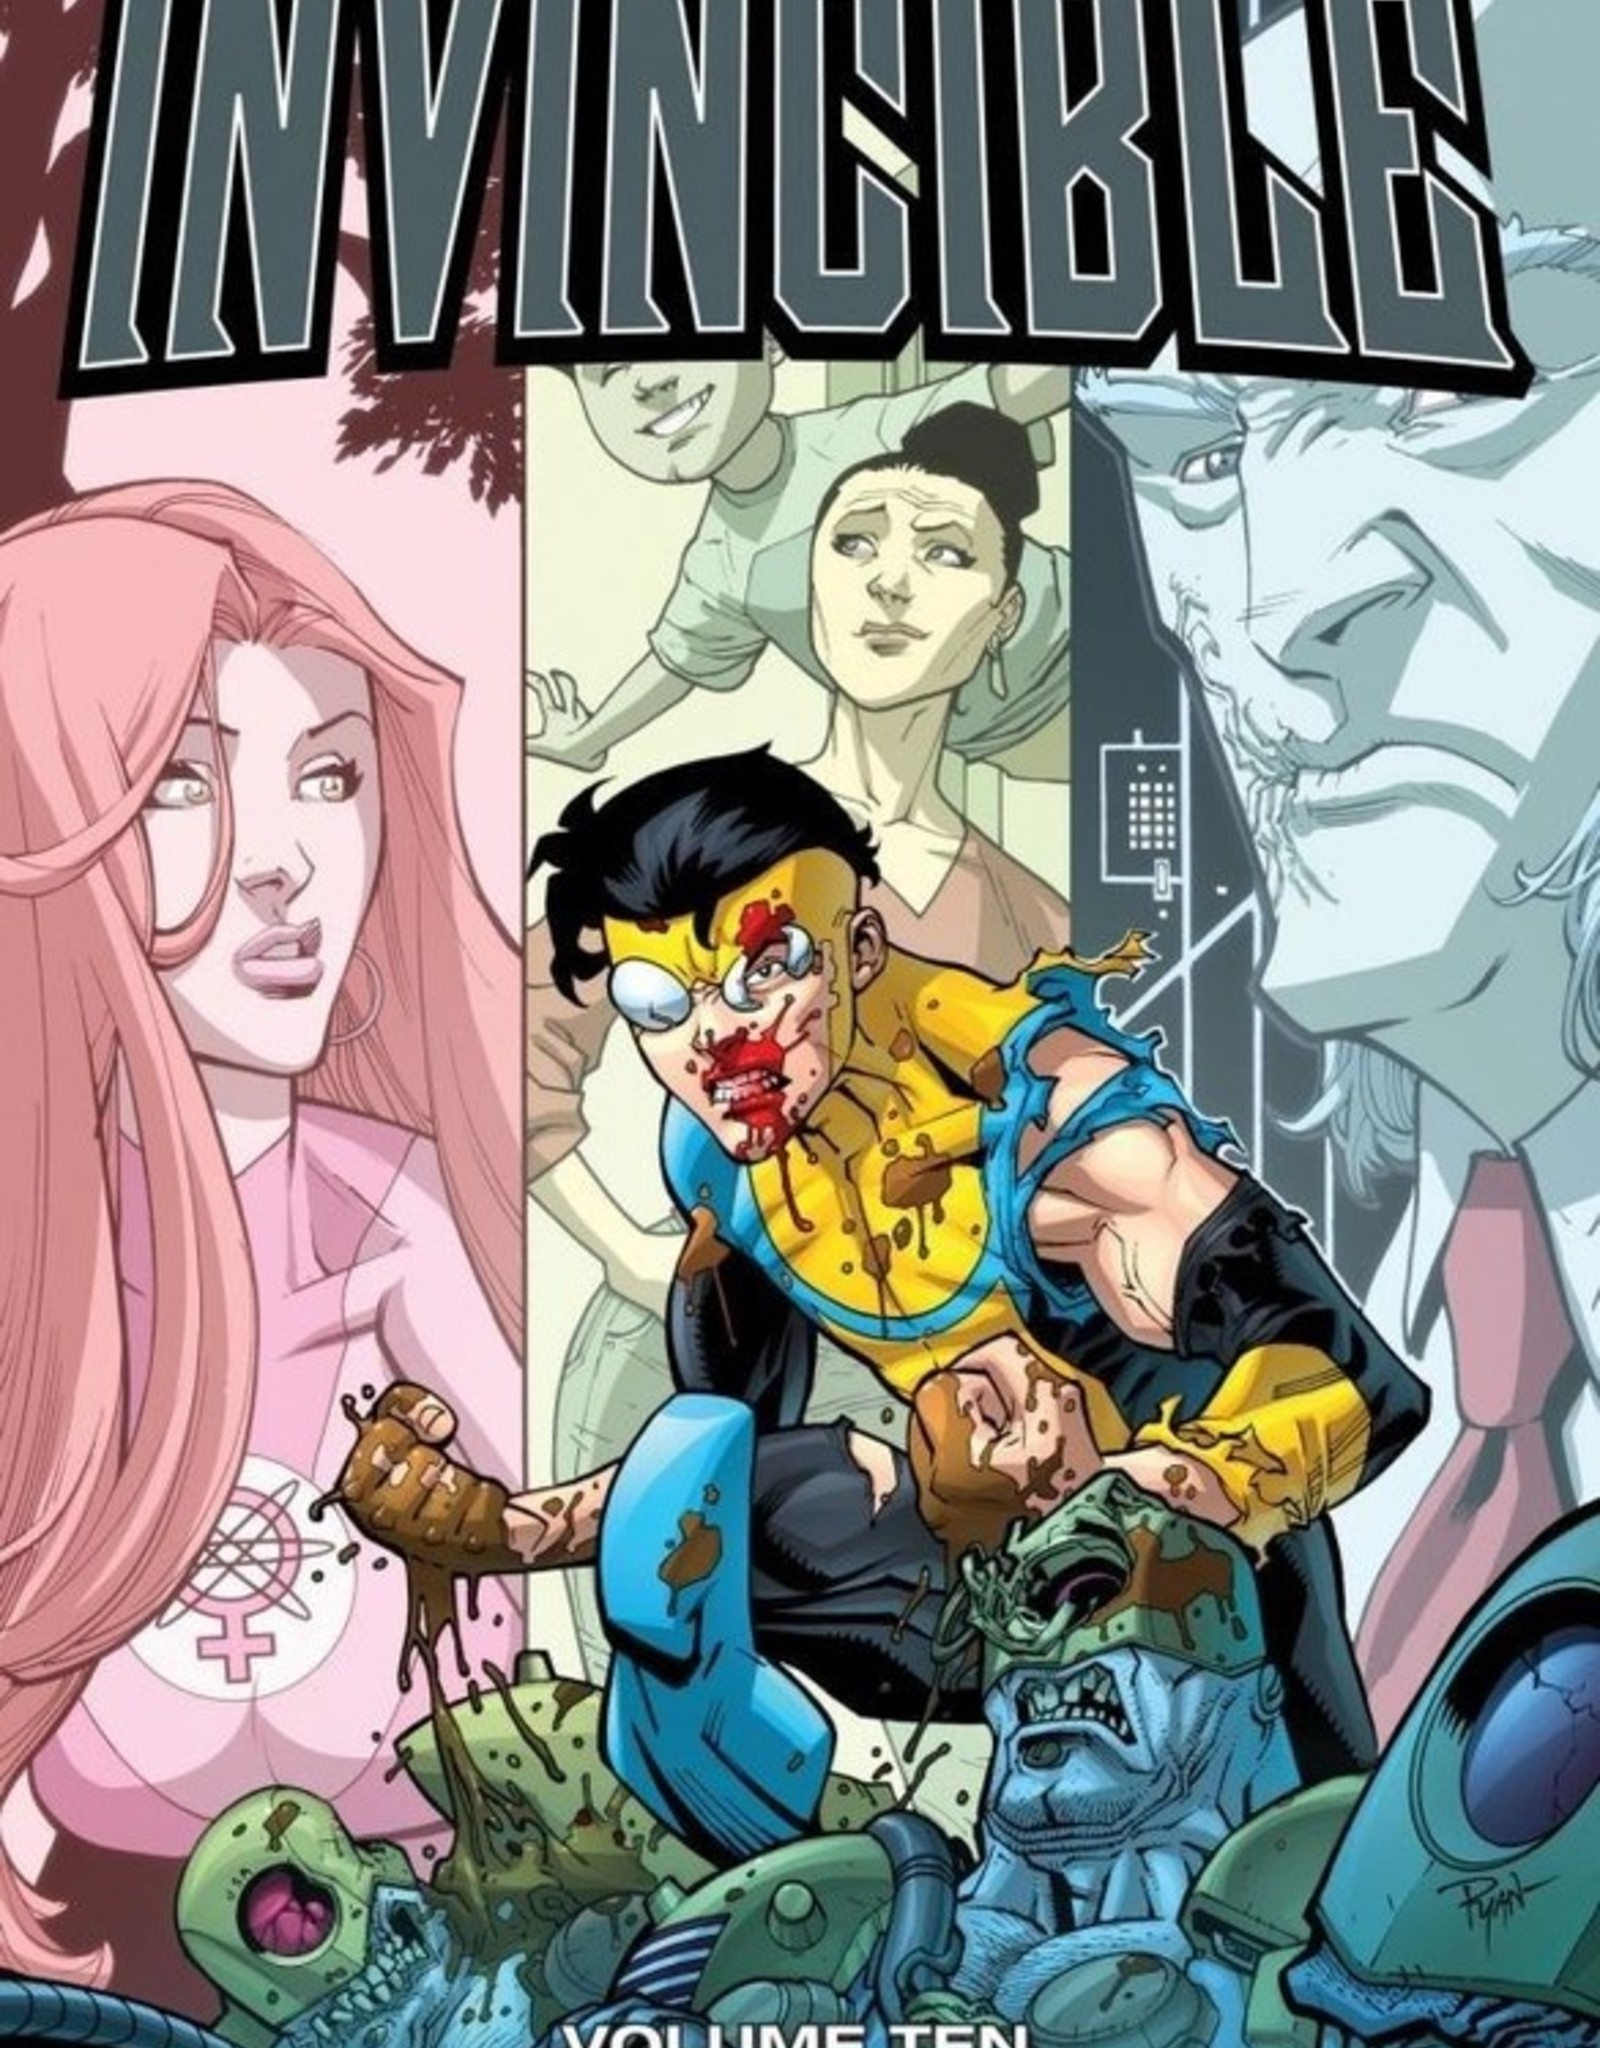 Image Comics Invincible TP Volume 10 Whos The Boss